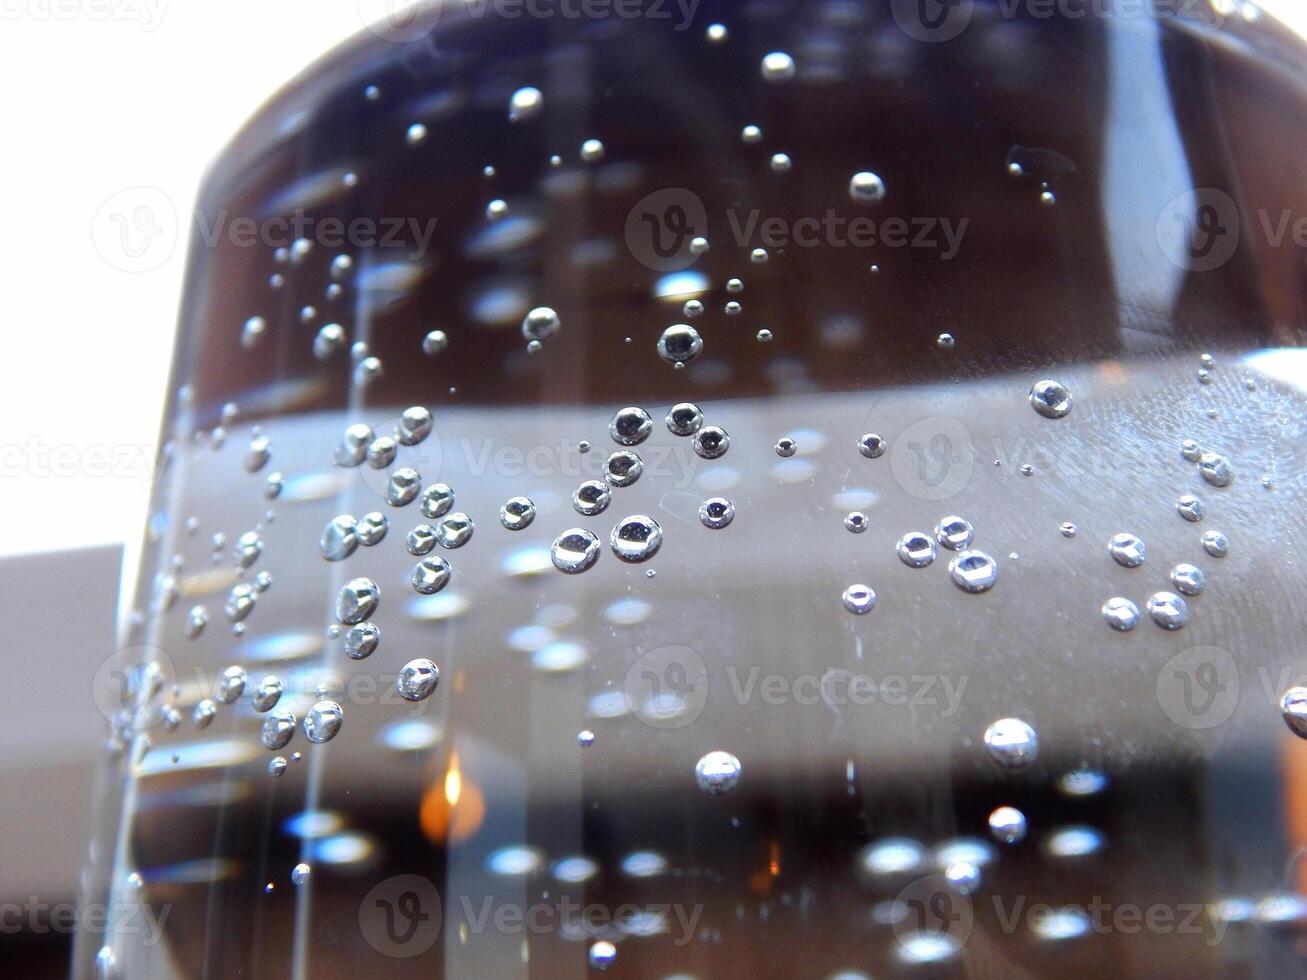 patroon van bubbels Aan binnenste oppervlakte van glas met sprankelend water detailopname voorraad foto